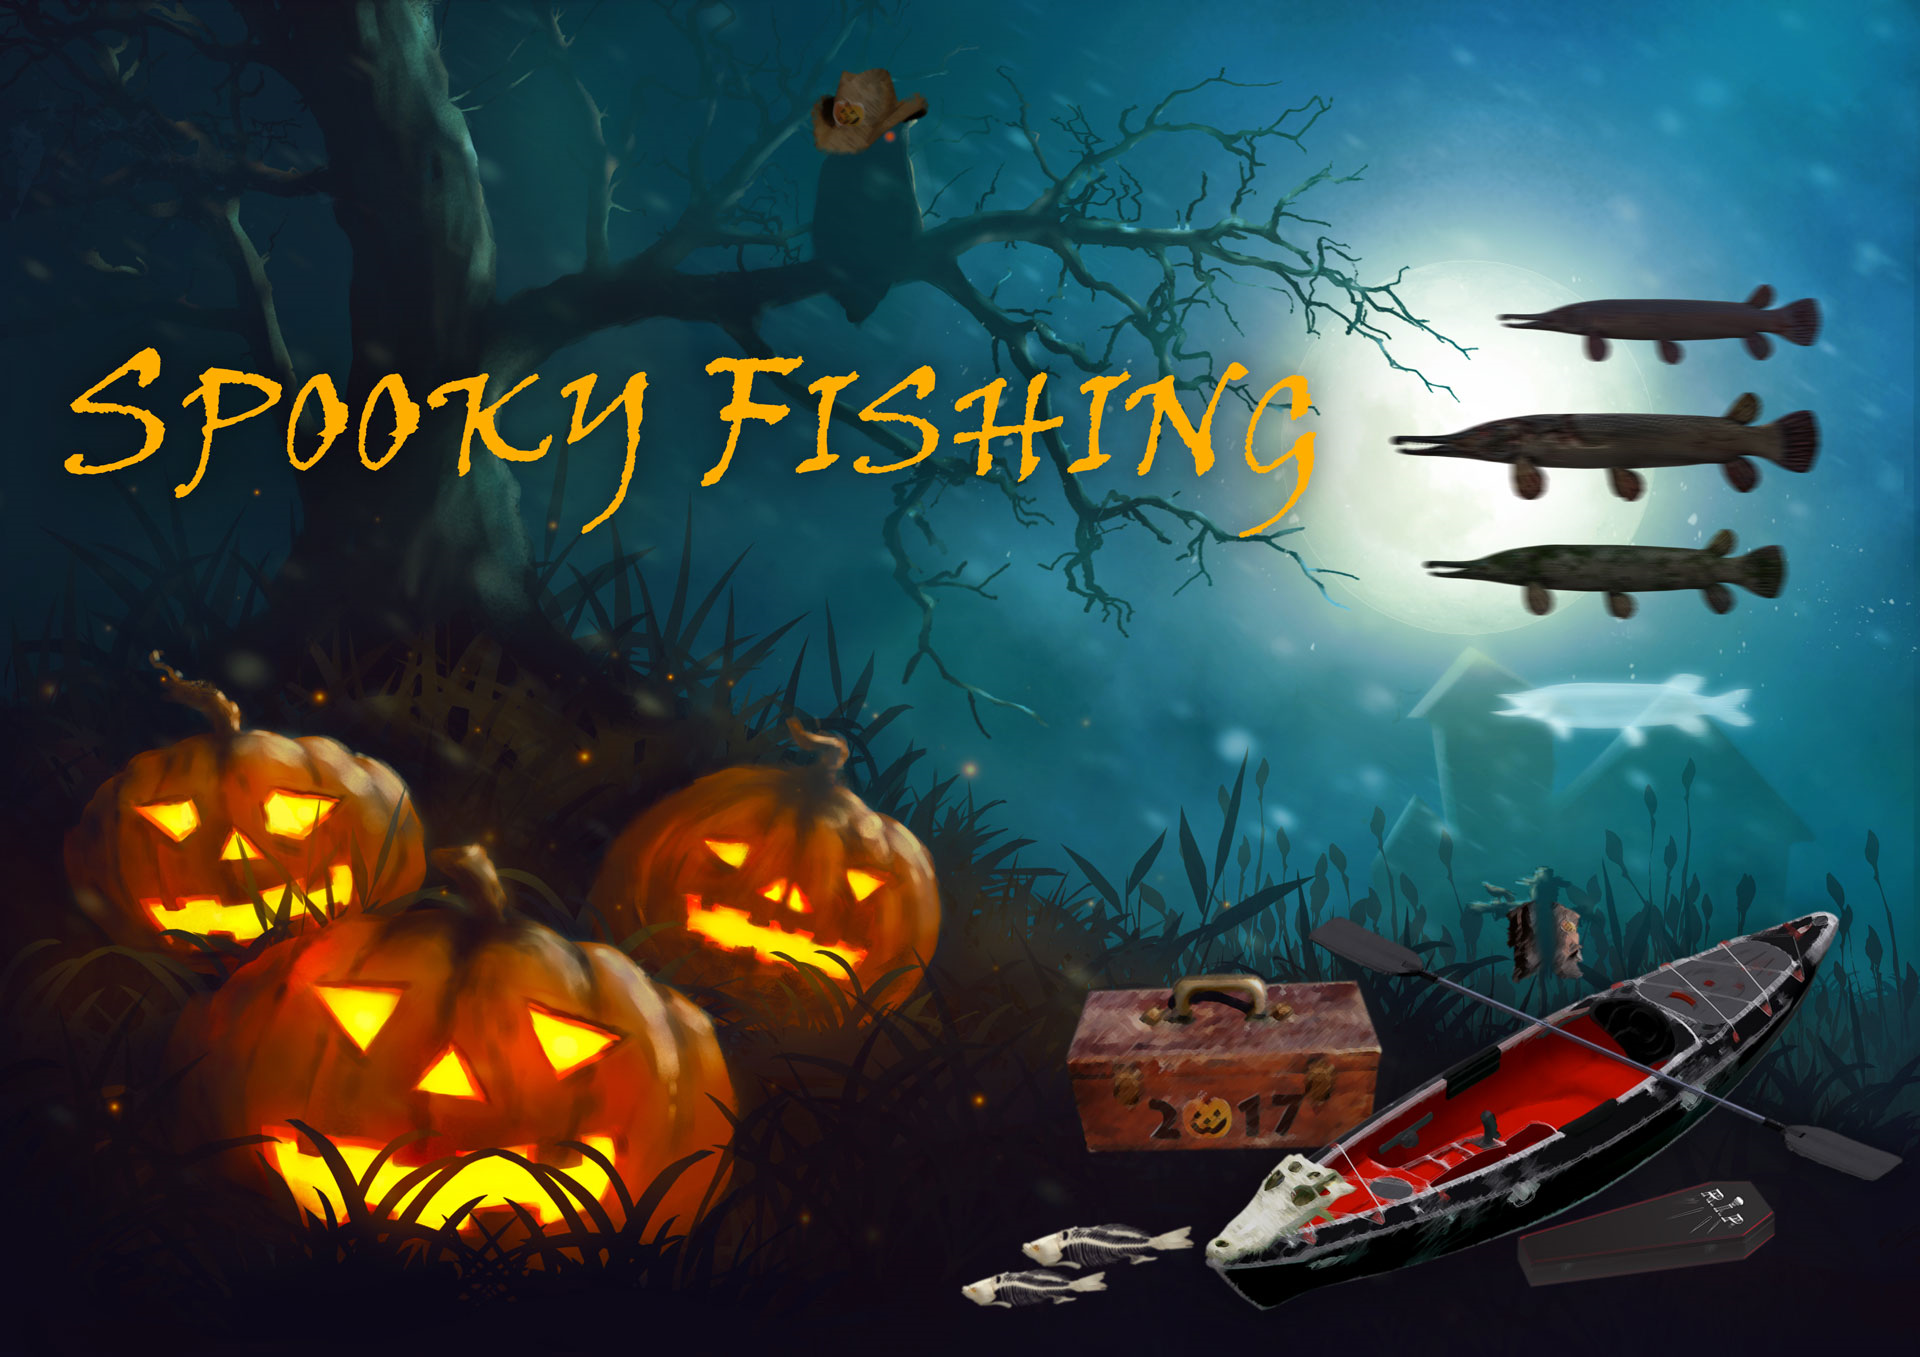 fishing planet halloween event pu mpkin